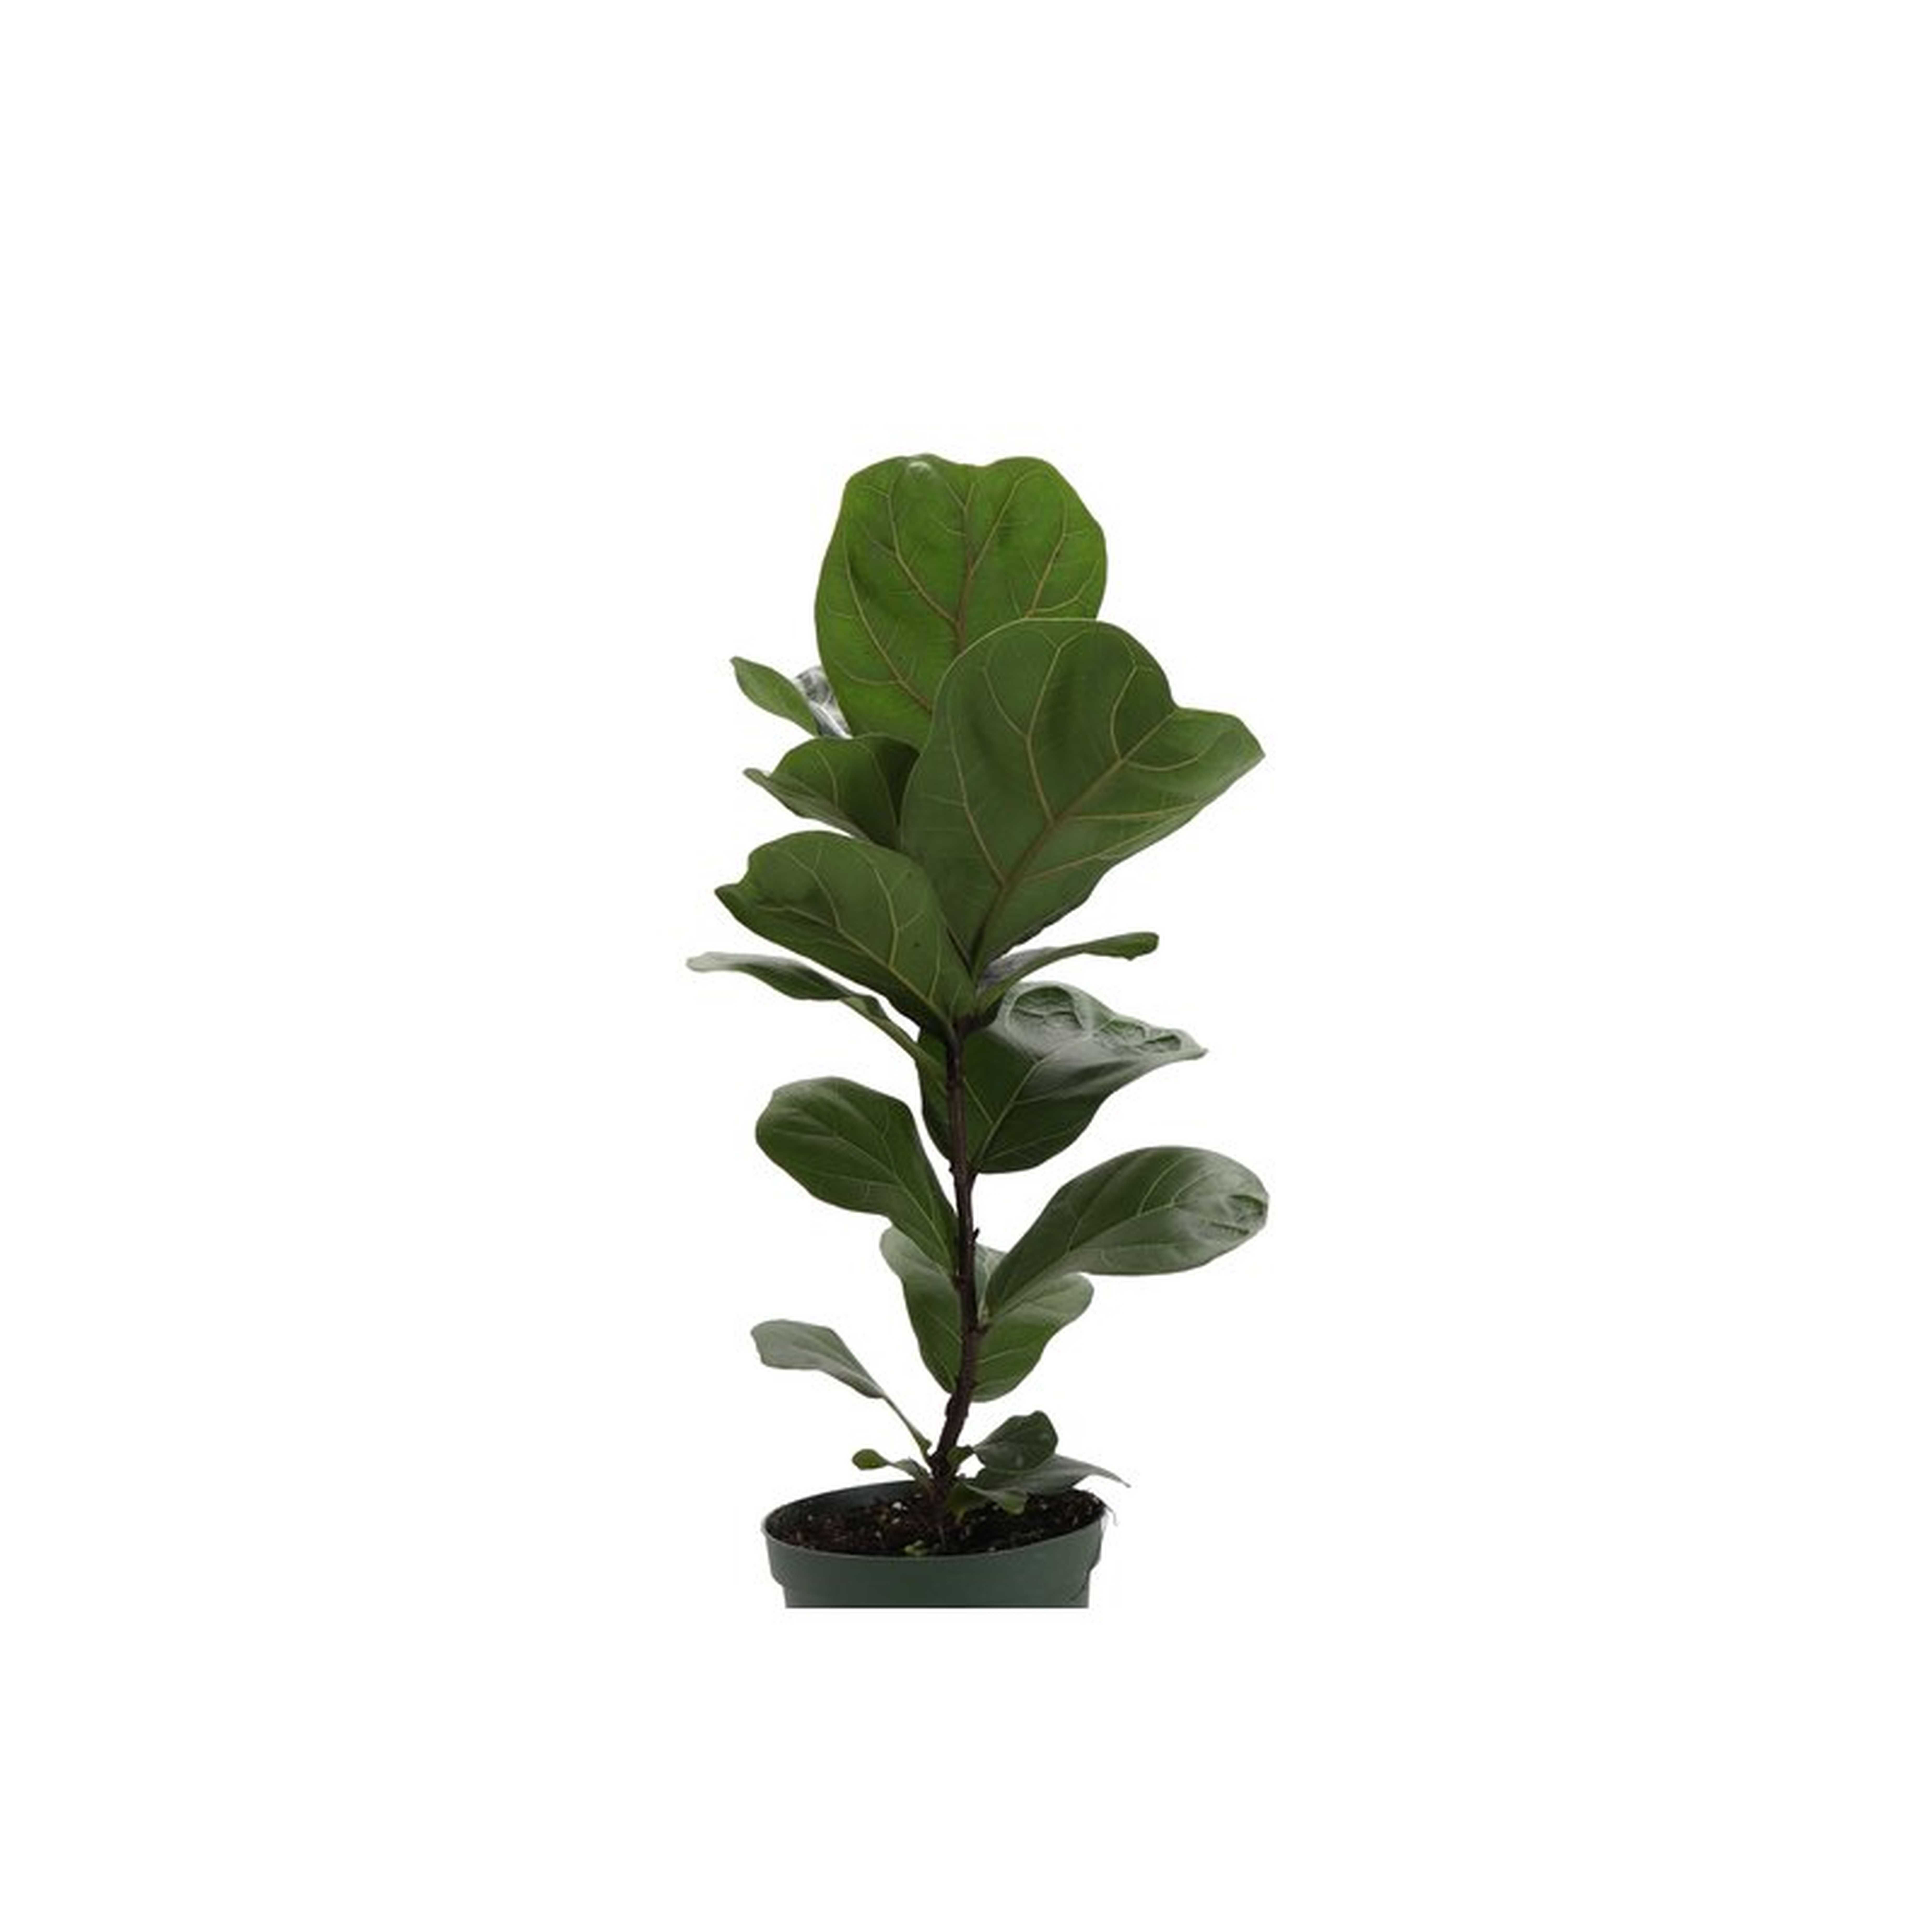 Thorsen's Greenhouse Live Fiddle Leaf Fig Plant, 6"" Diameter - Perigold